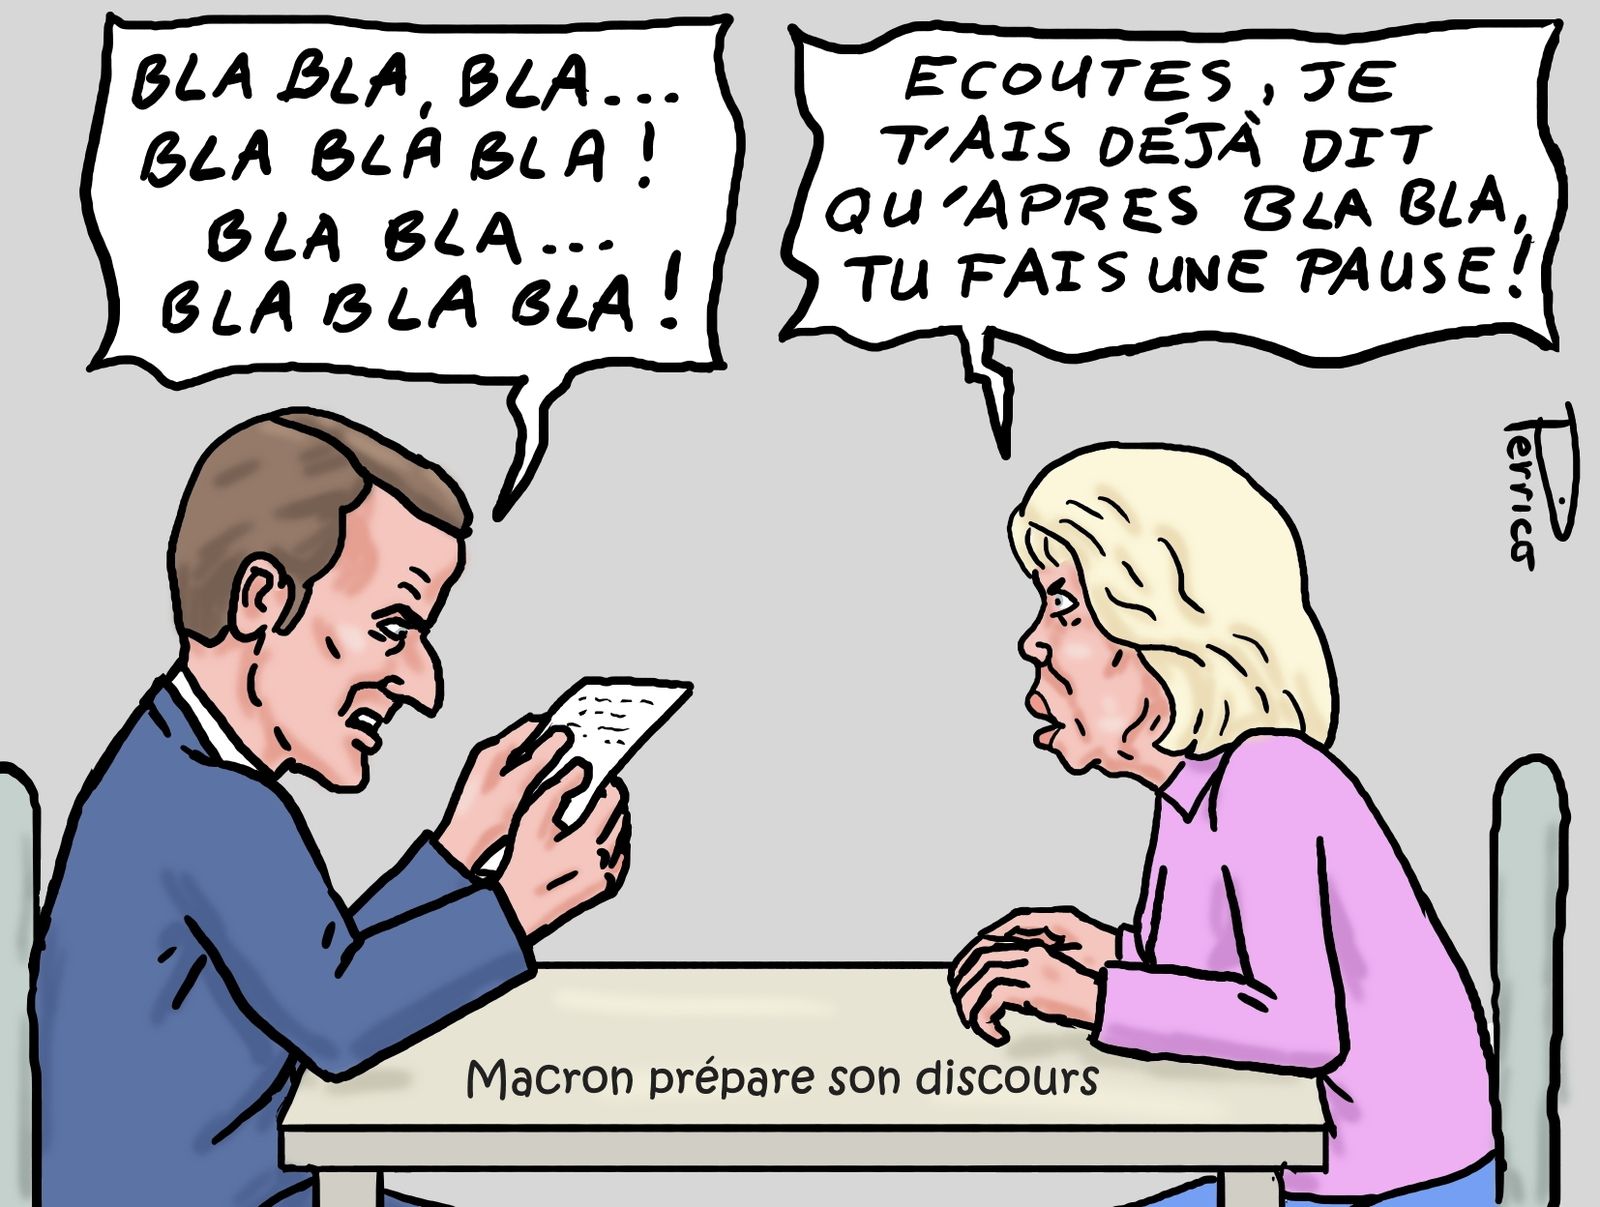 Emmanuel Macron, Brigitte Macron, Covid-19, coronavirus